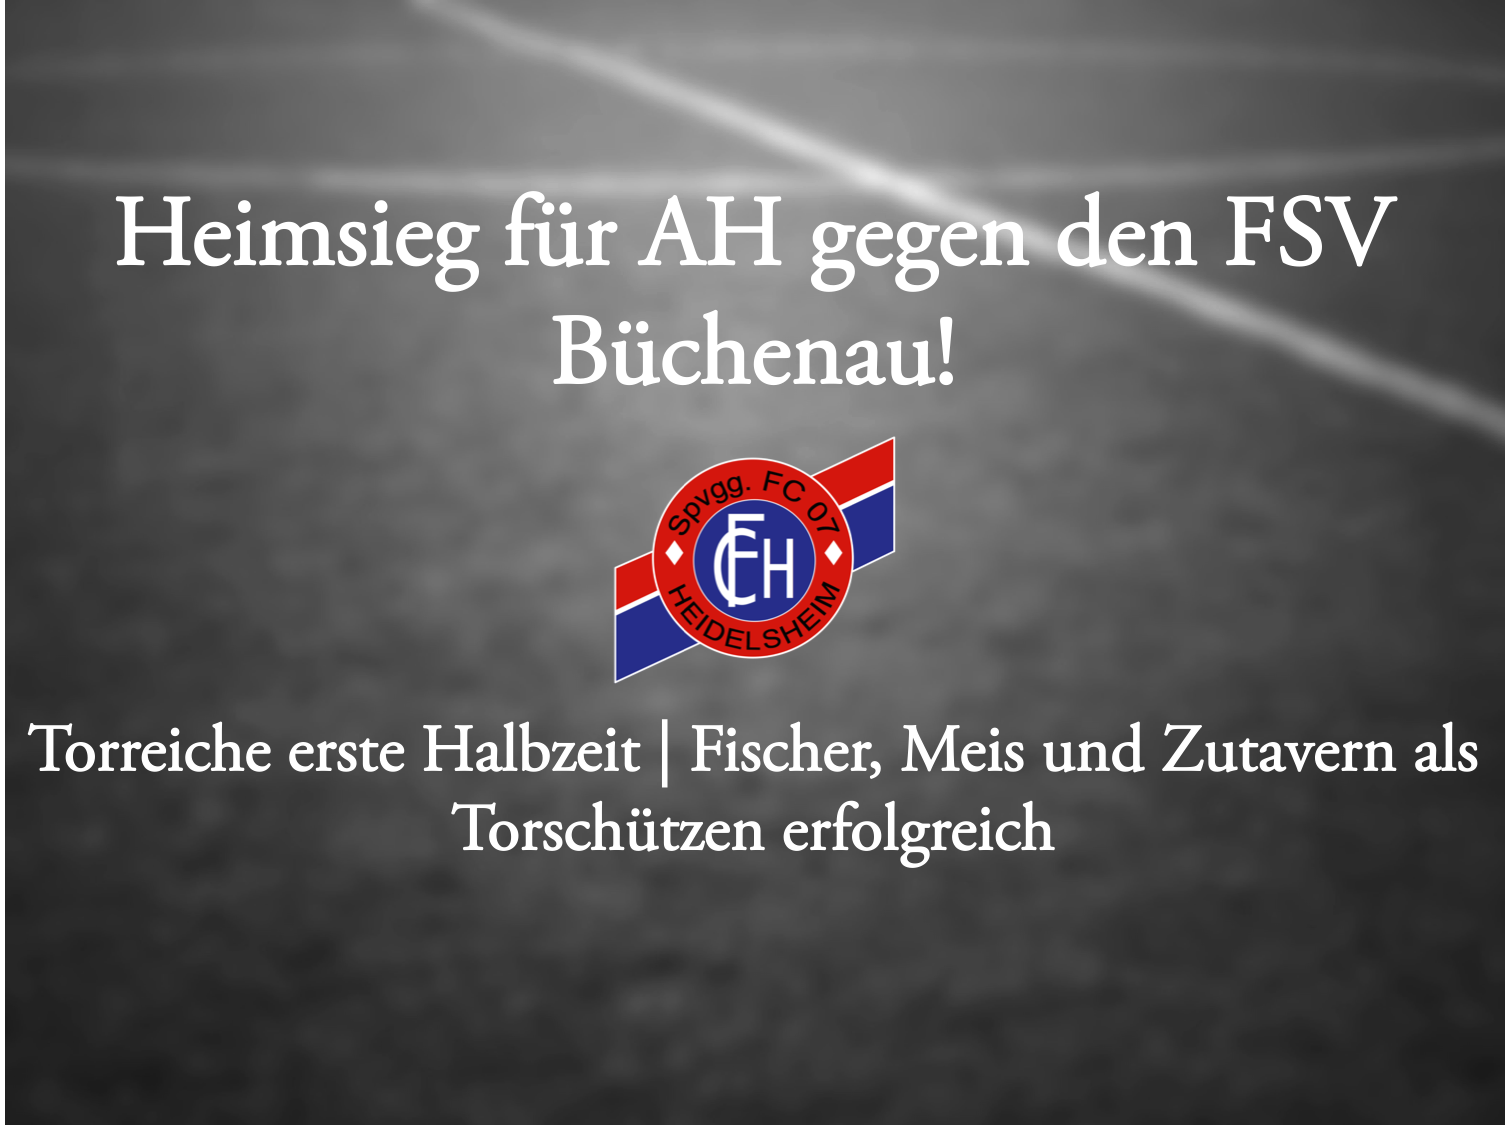 You are currently viewing AH schlägt FSV Büchenau!